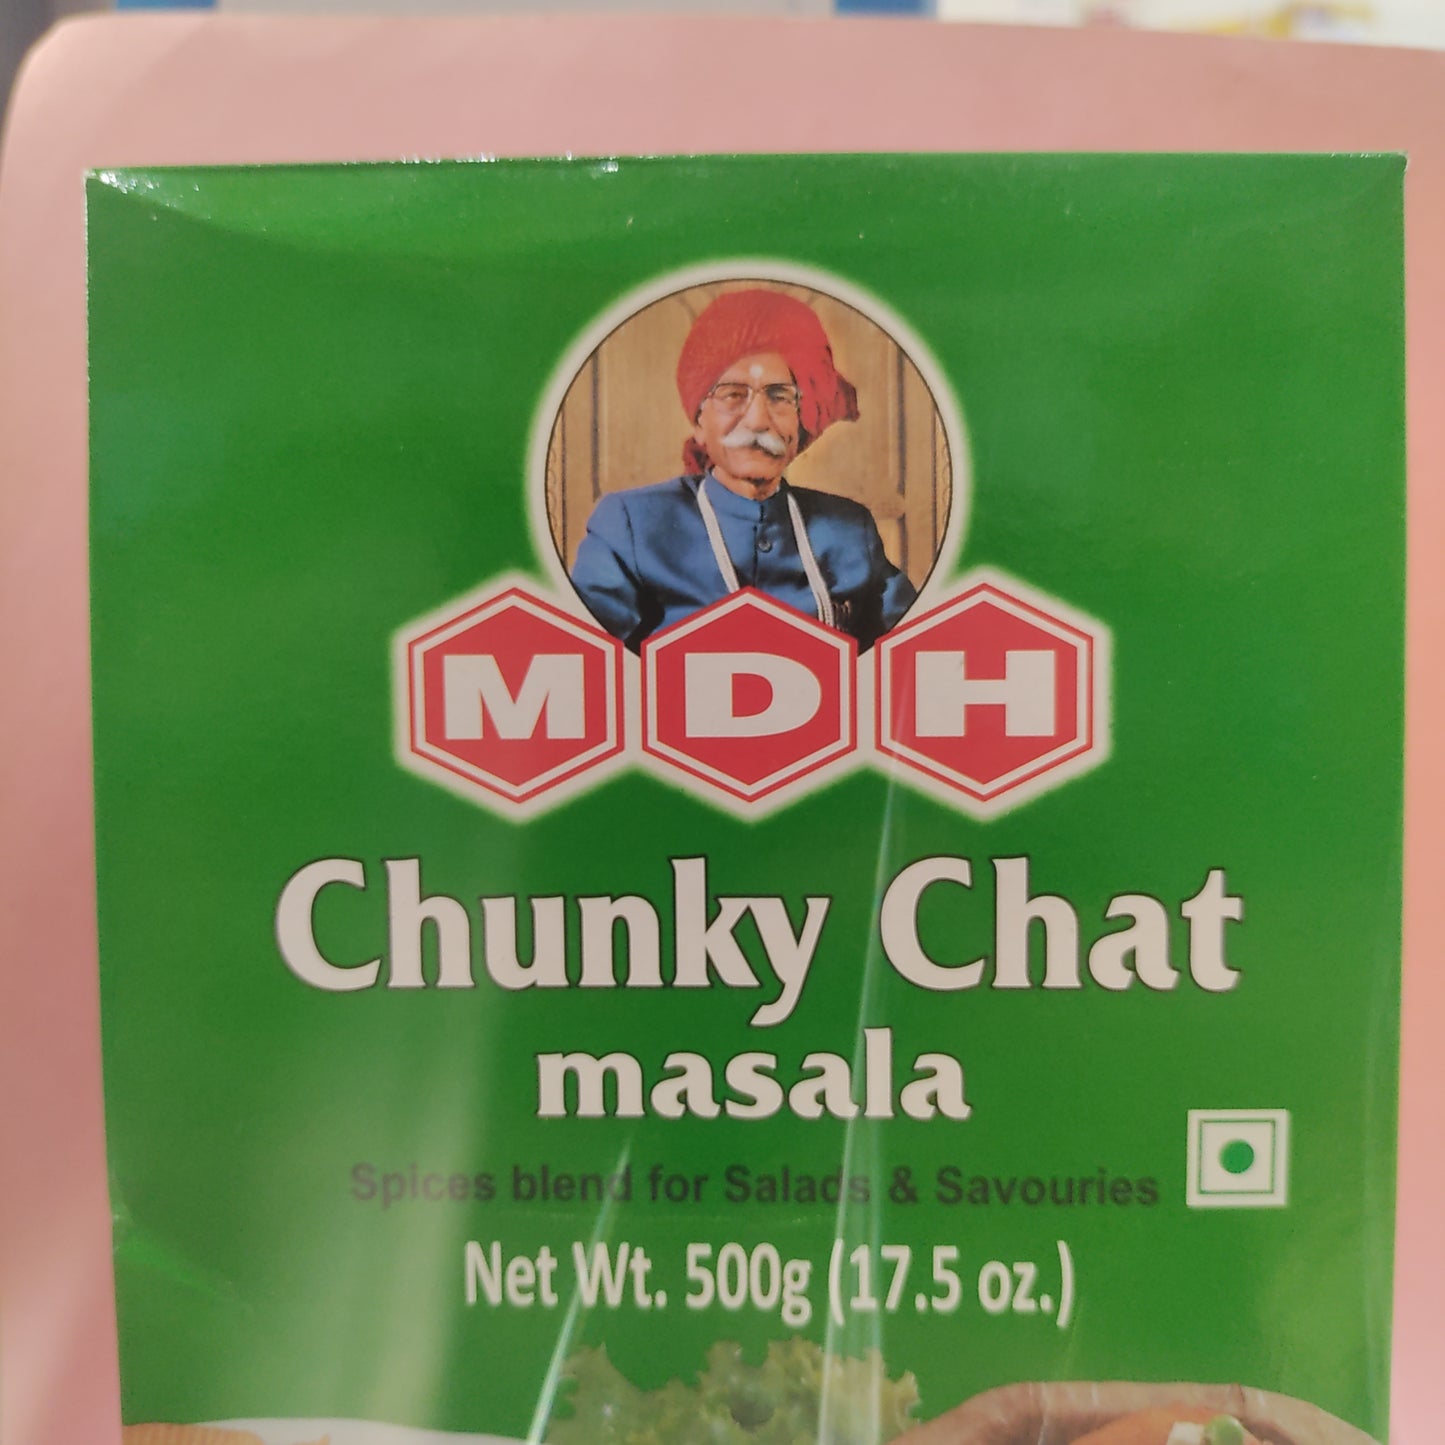 Mdh chunky chat masala 500 g